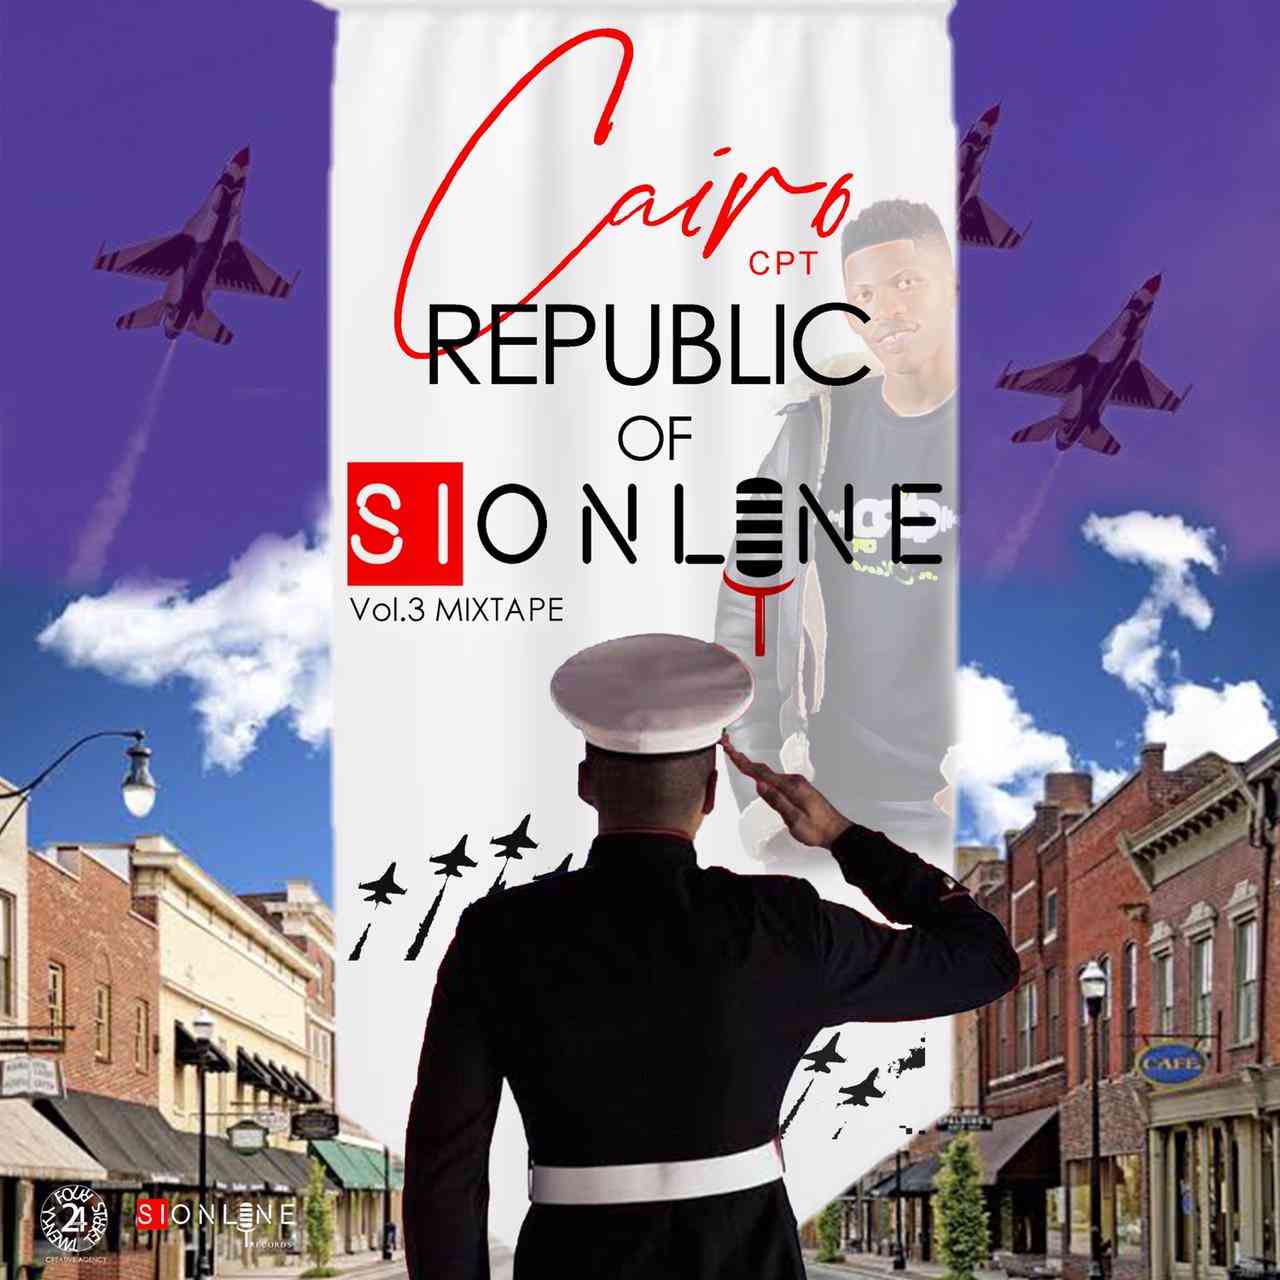 Cairo Cpt Republic Of Si Online Vol. 3 Mix